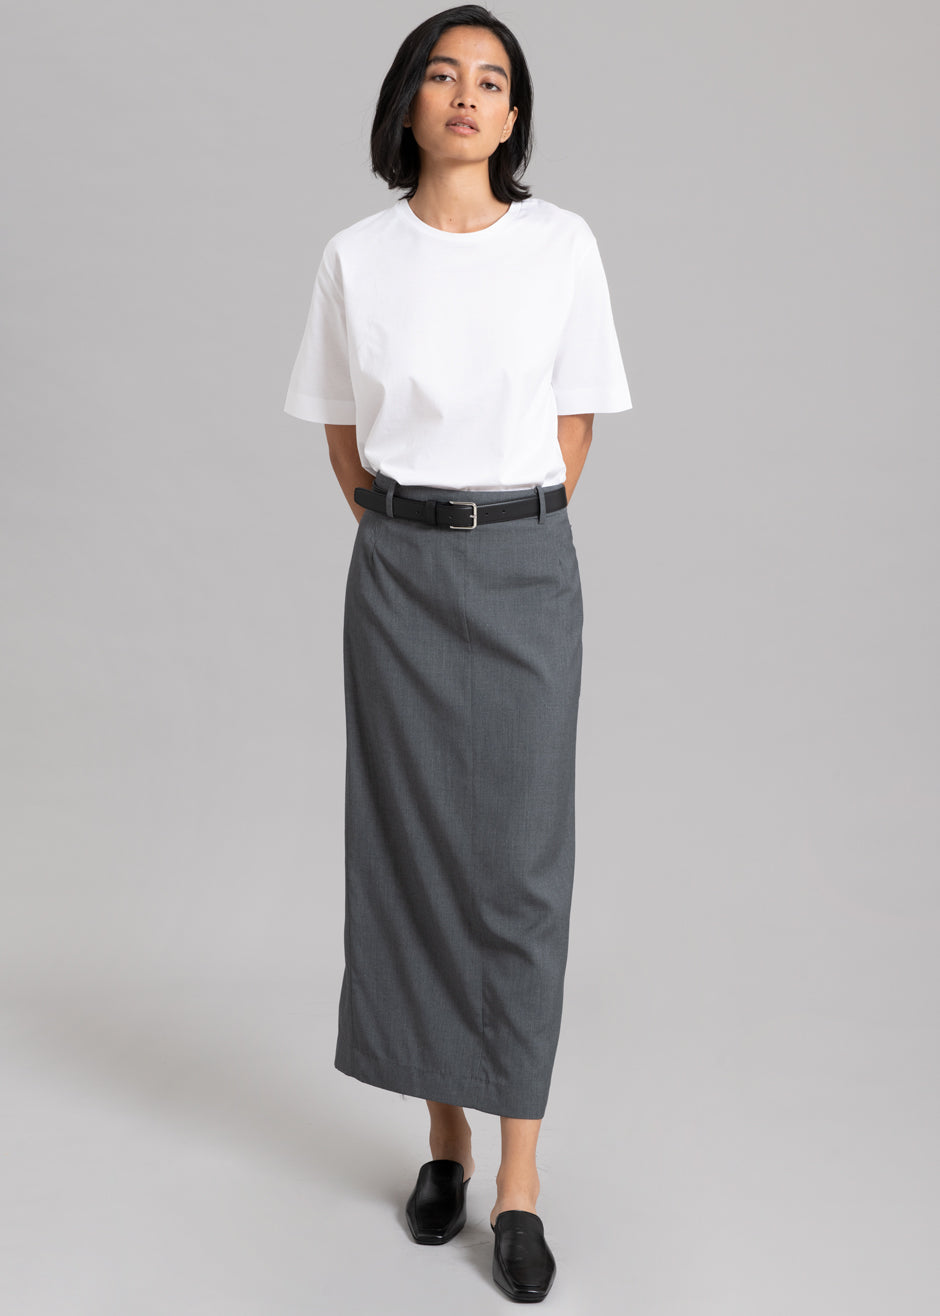 Malvo Long Pencil Skirt - Charcoal